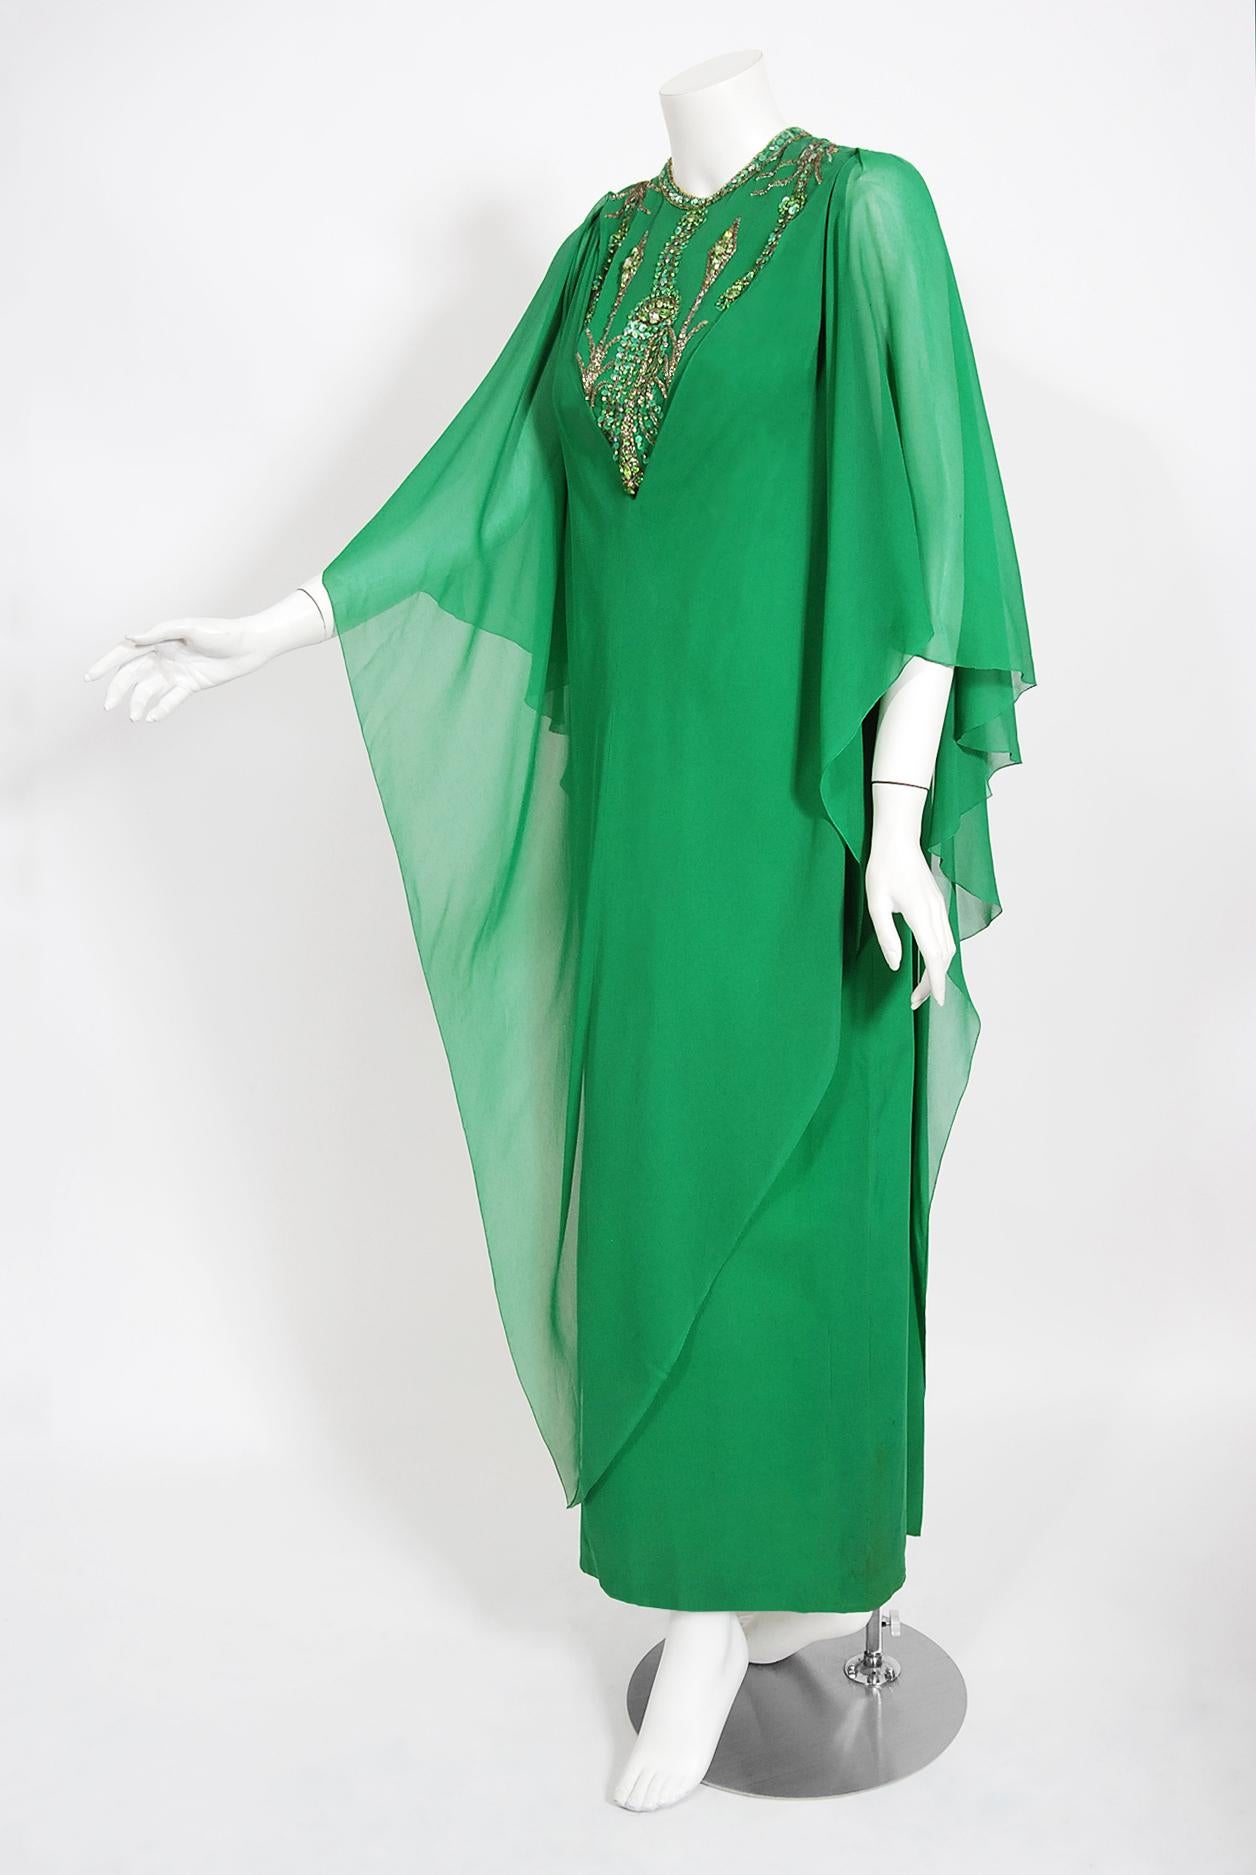 Women's Vintage 1965 Pierre Cardin Haute Couture Beaded Green Silk Chiffon Caftan Gown For Sale